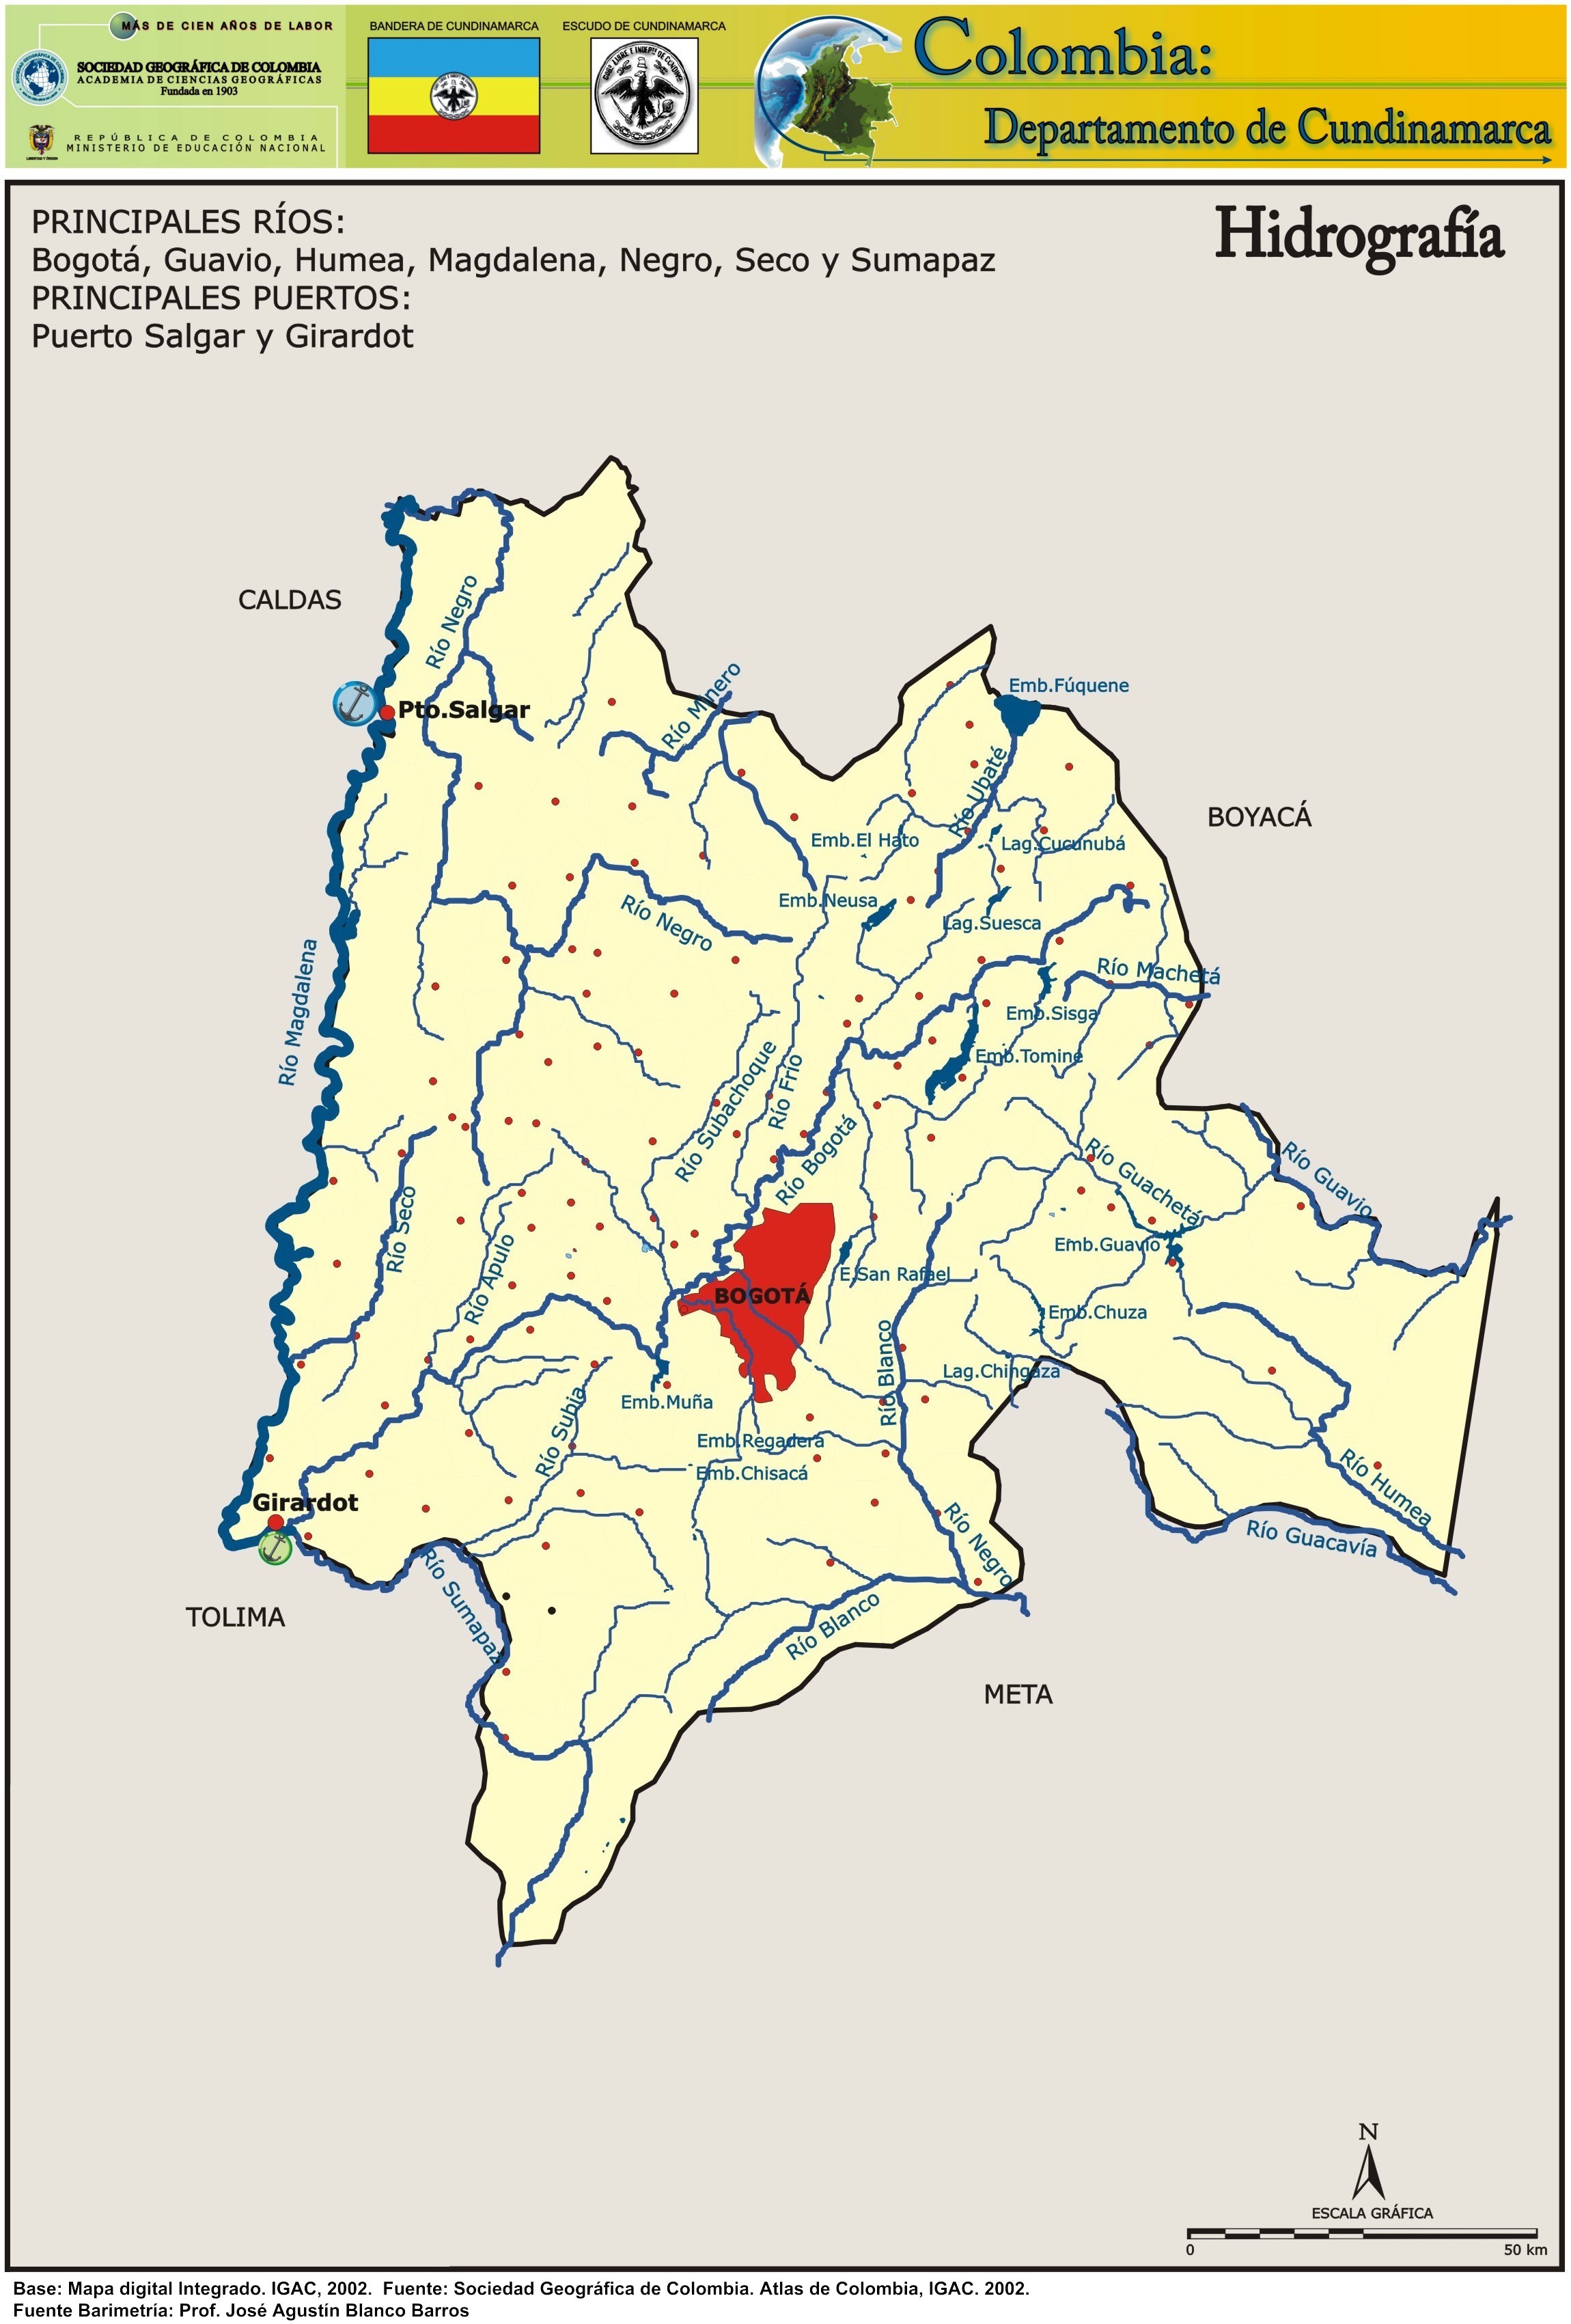 Bogotá River - Wikipedia